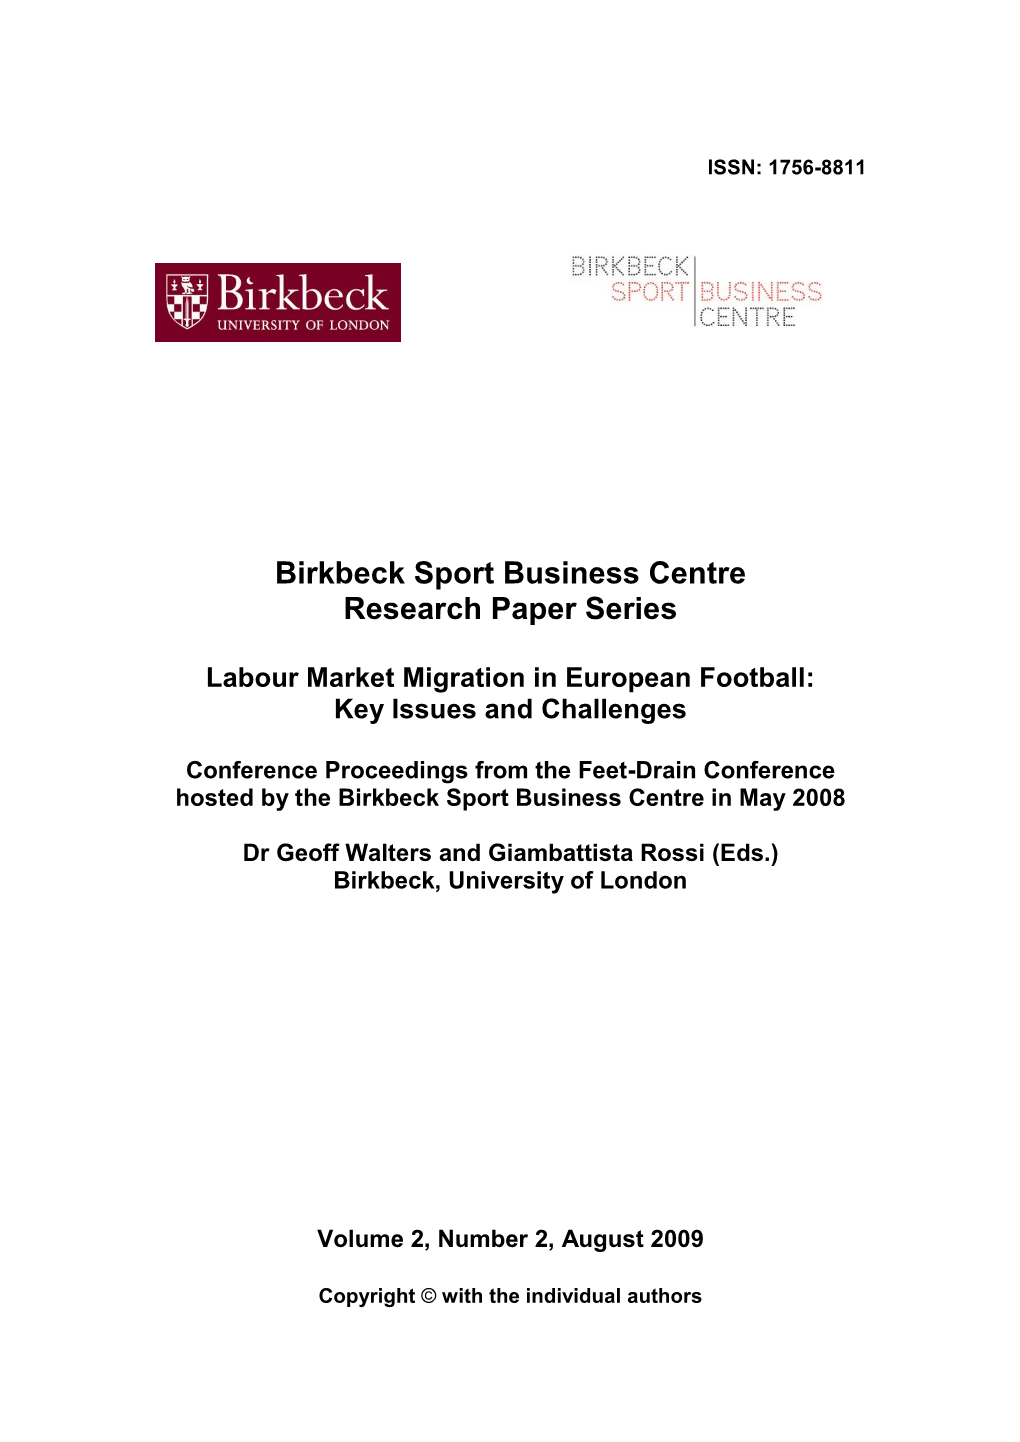 Birkbeck Sport Business Centre Research Paper Series Labour Market Migration in European Football